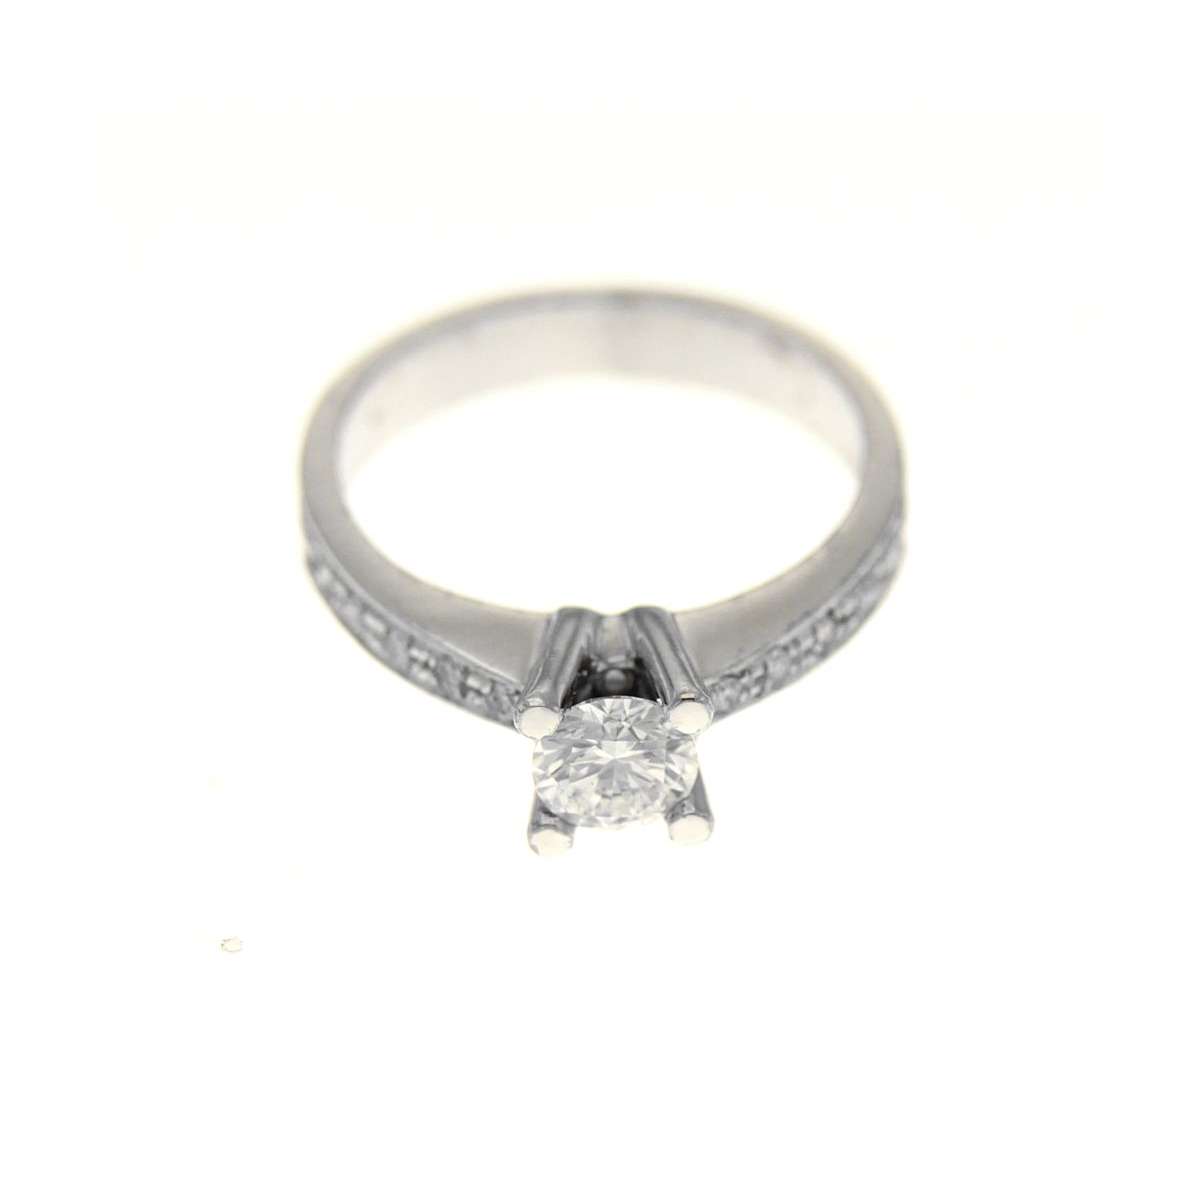 Central diamond solitaire ring GIA certified ct 0.50 F-VS2 plus side diamonds ct 0.10 G-VS1